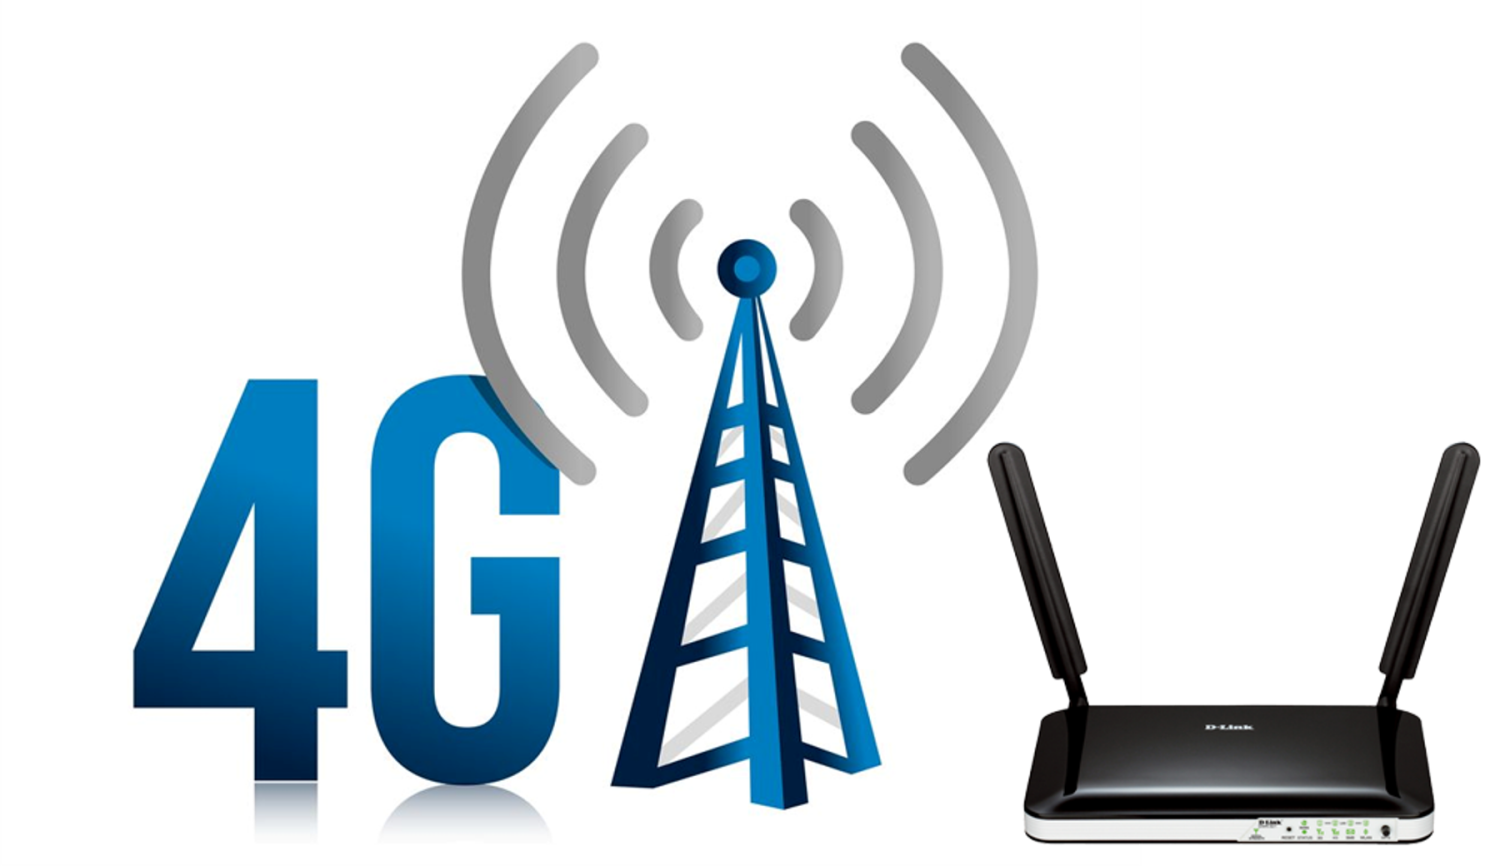 3 g соединение. Сети сотовой связи 4g. 4g LTE. 3g 4g LTE device. Мобильная сеть 4g (WIMAX va LTE).